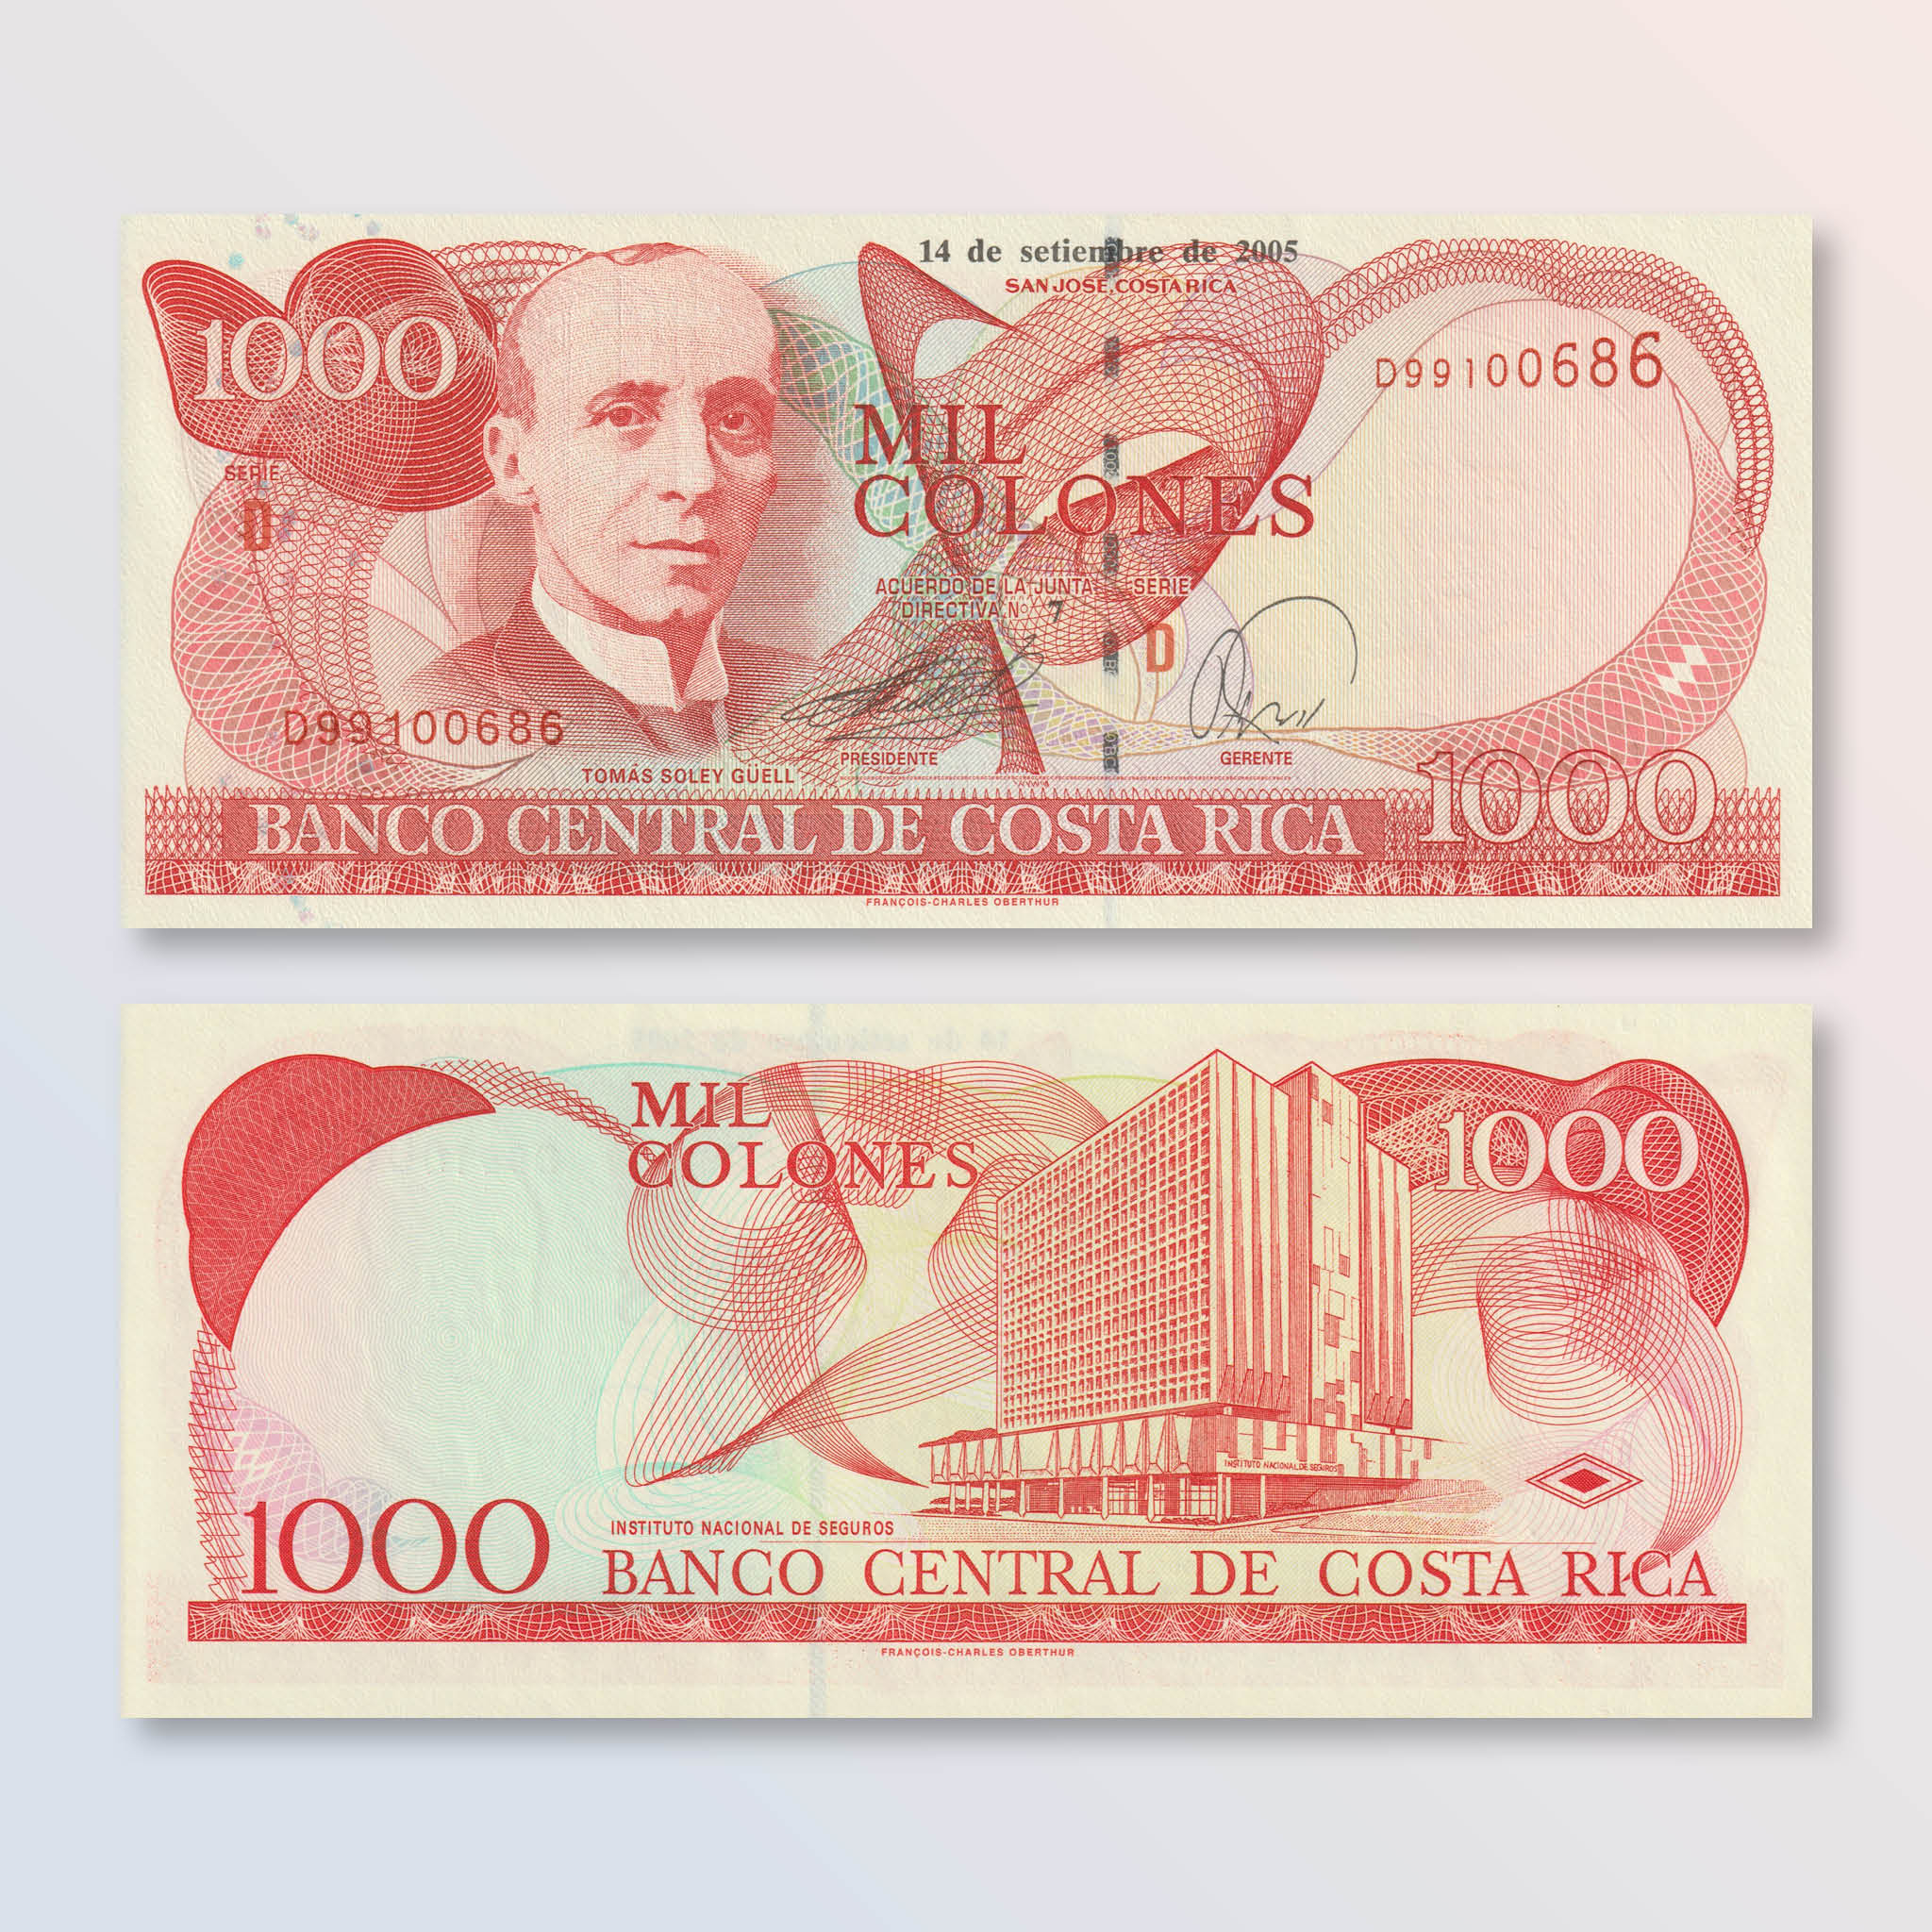 Costa Rica 1000 Colones, 2005, B546f, P264f, UNC - Robert's World Money - World Banknotes